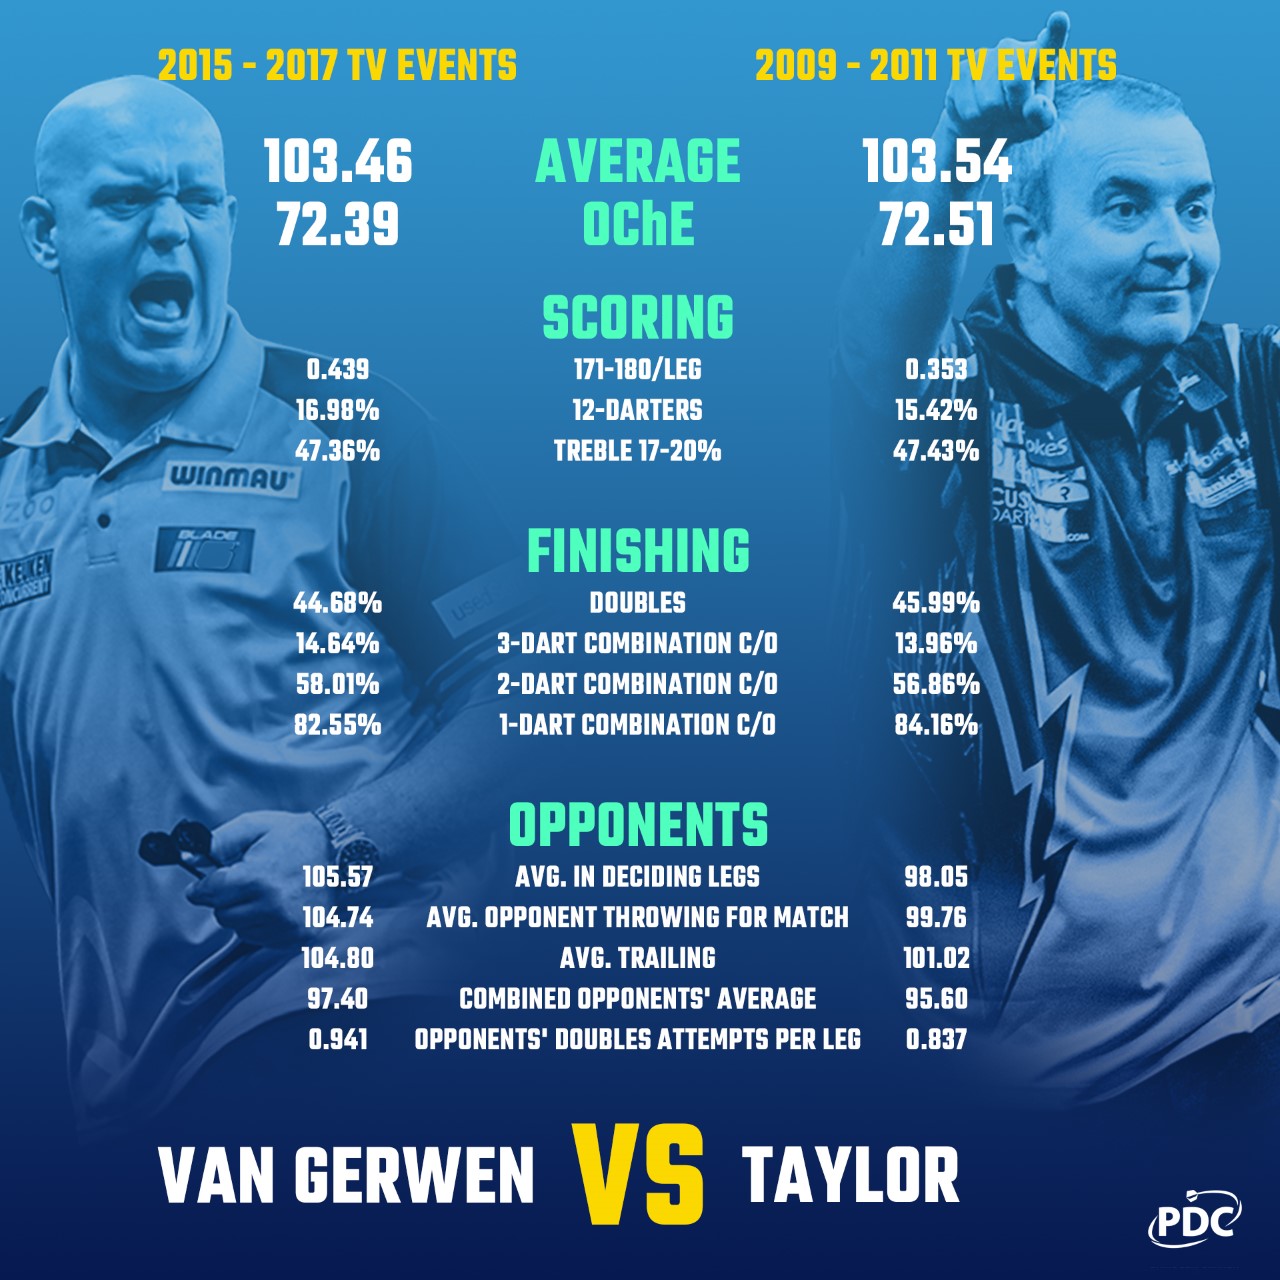 Van Gerwen vs Taylor - Comparison